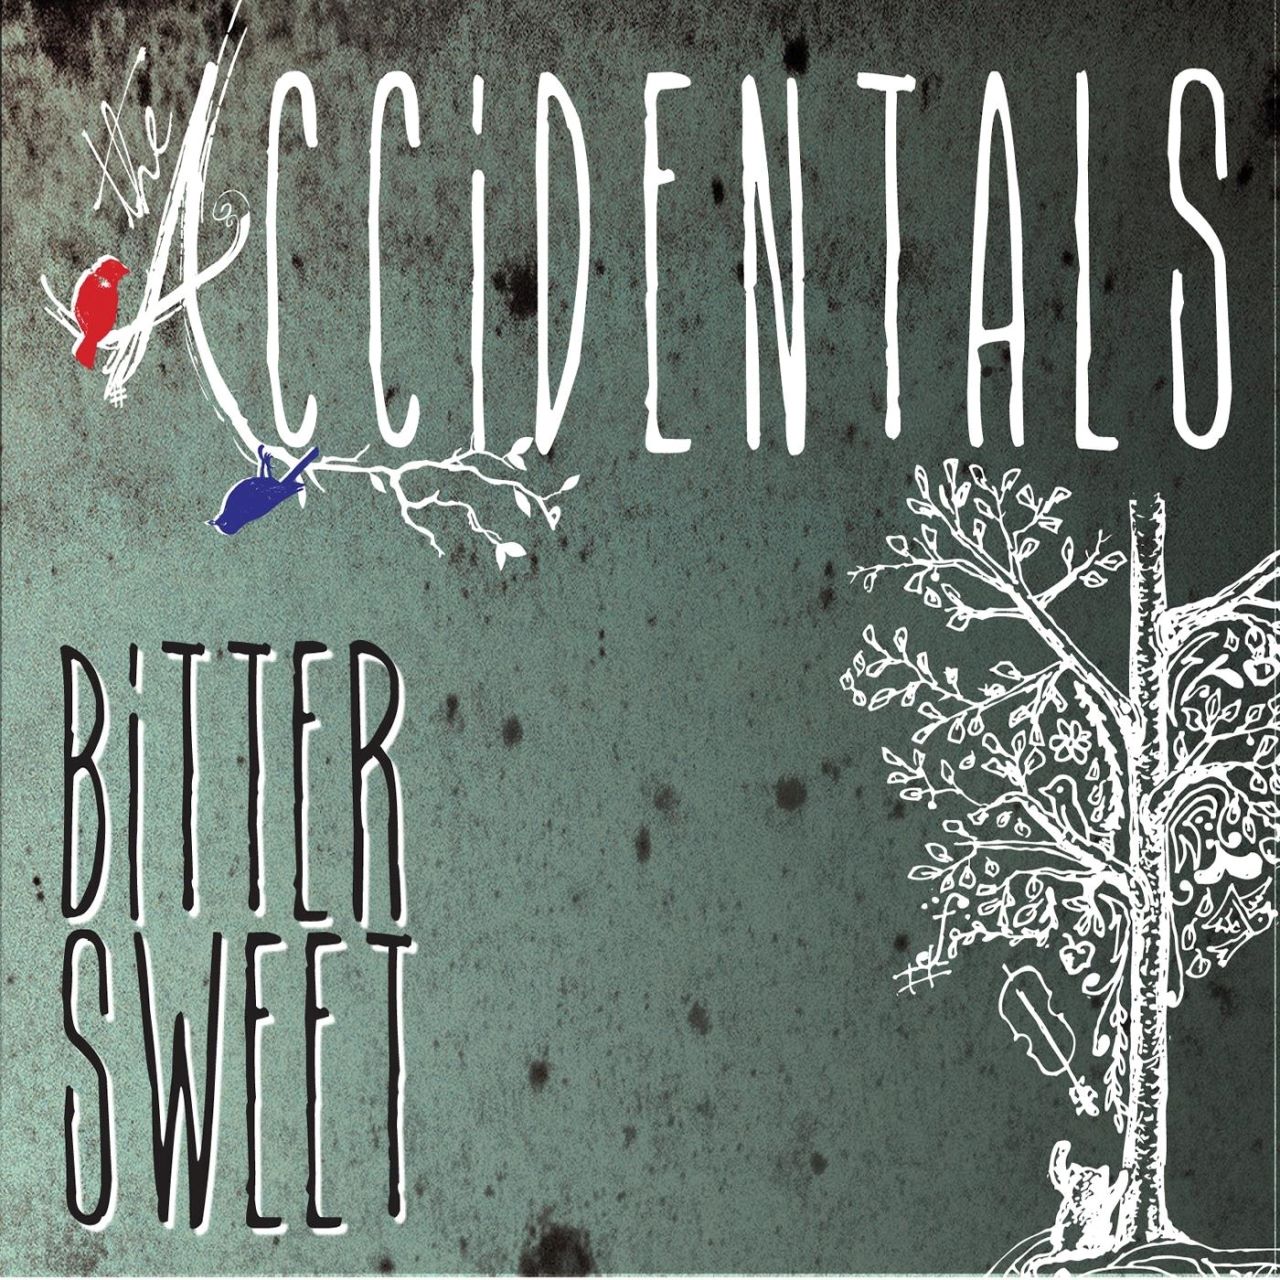 Accidentals - Bitter Sweet cover album